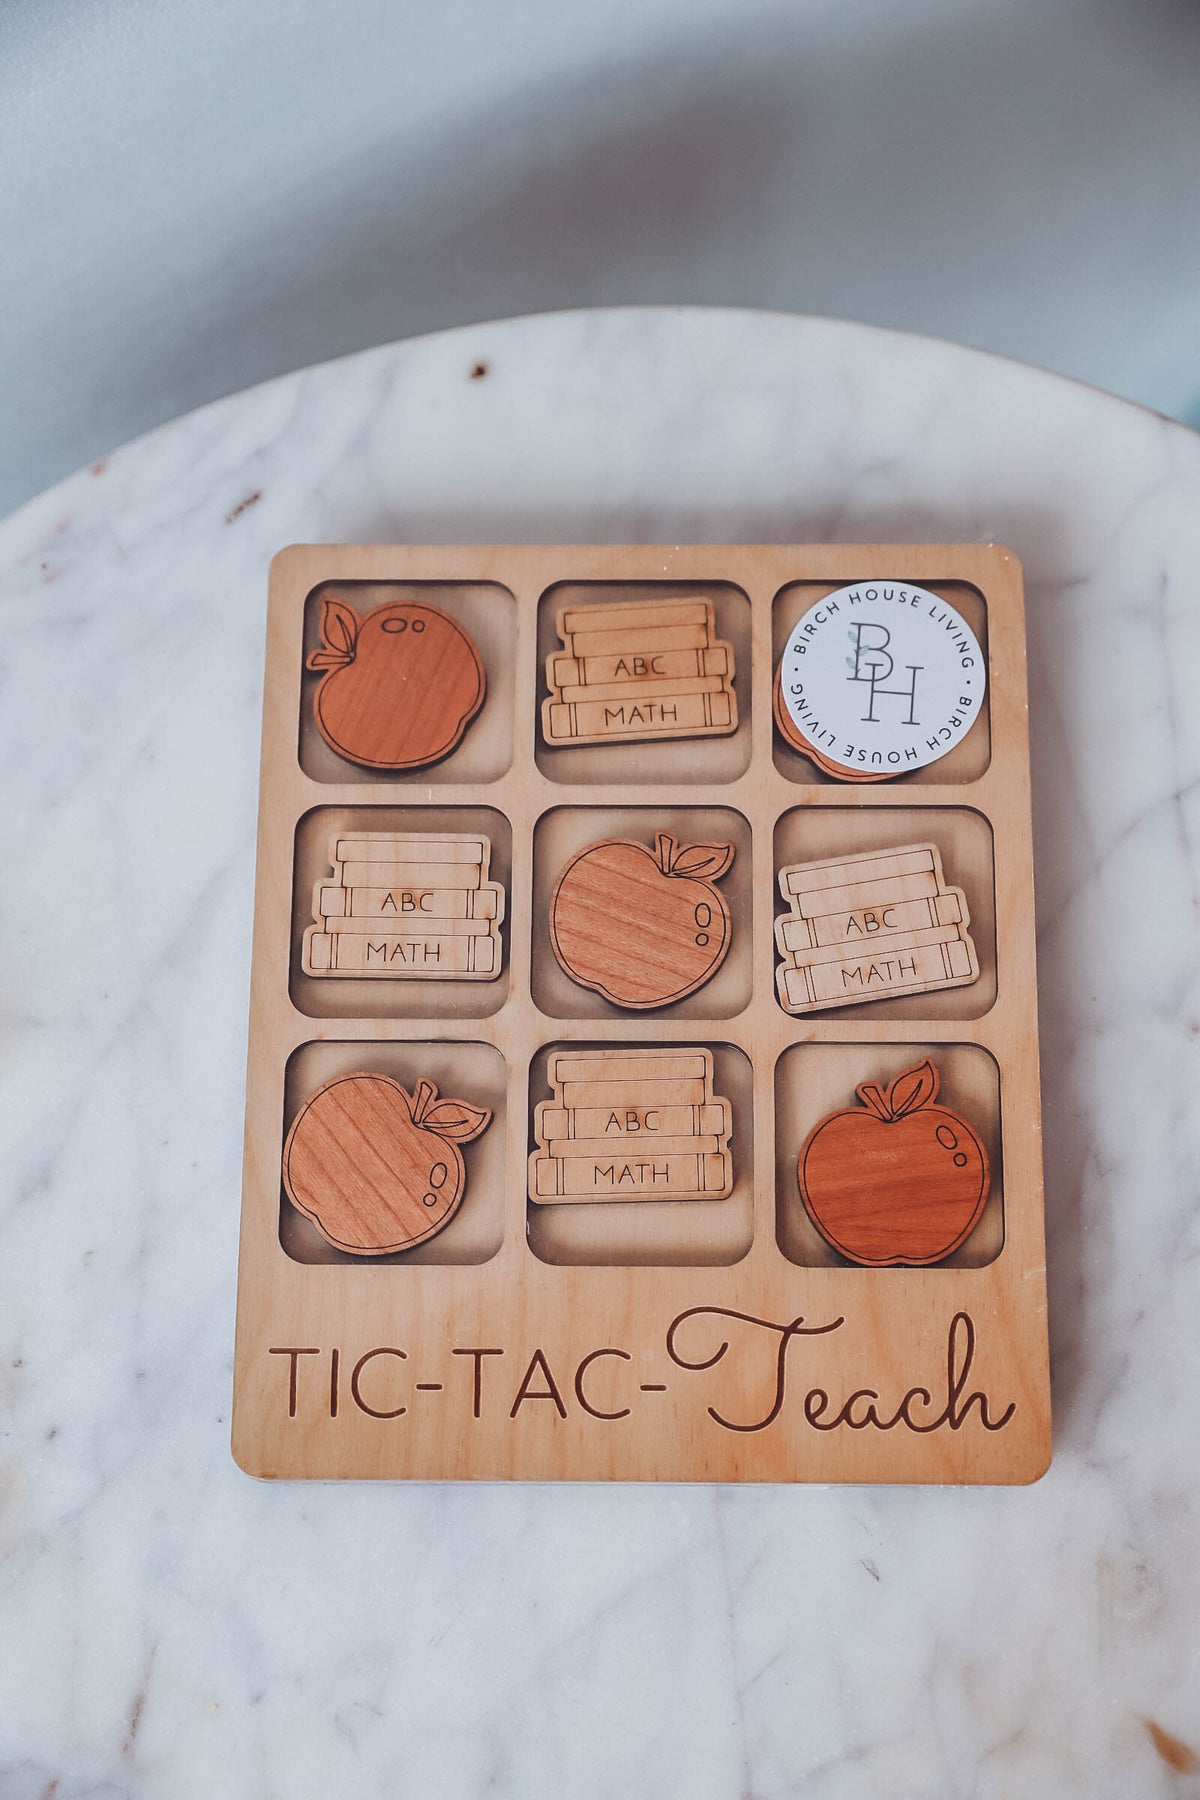 Tic-Tac-Toe Teacher Game